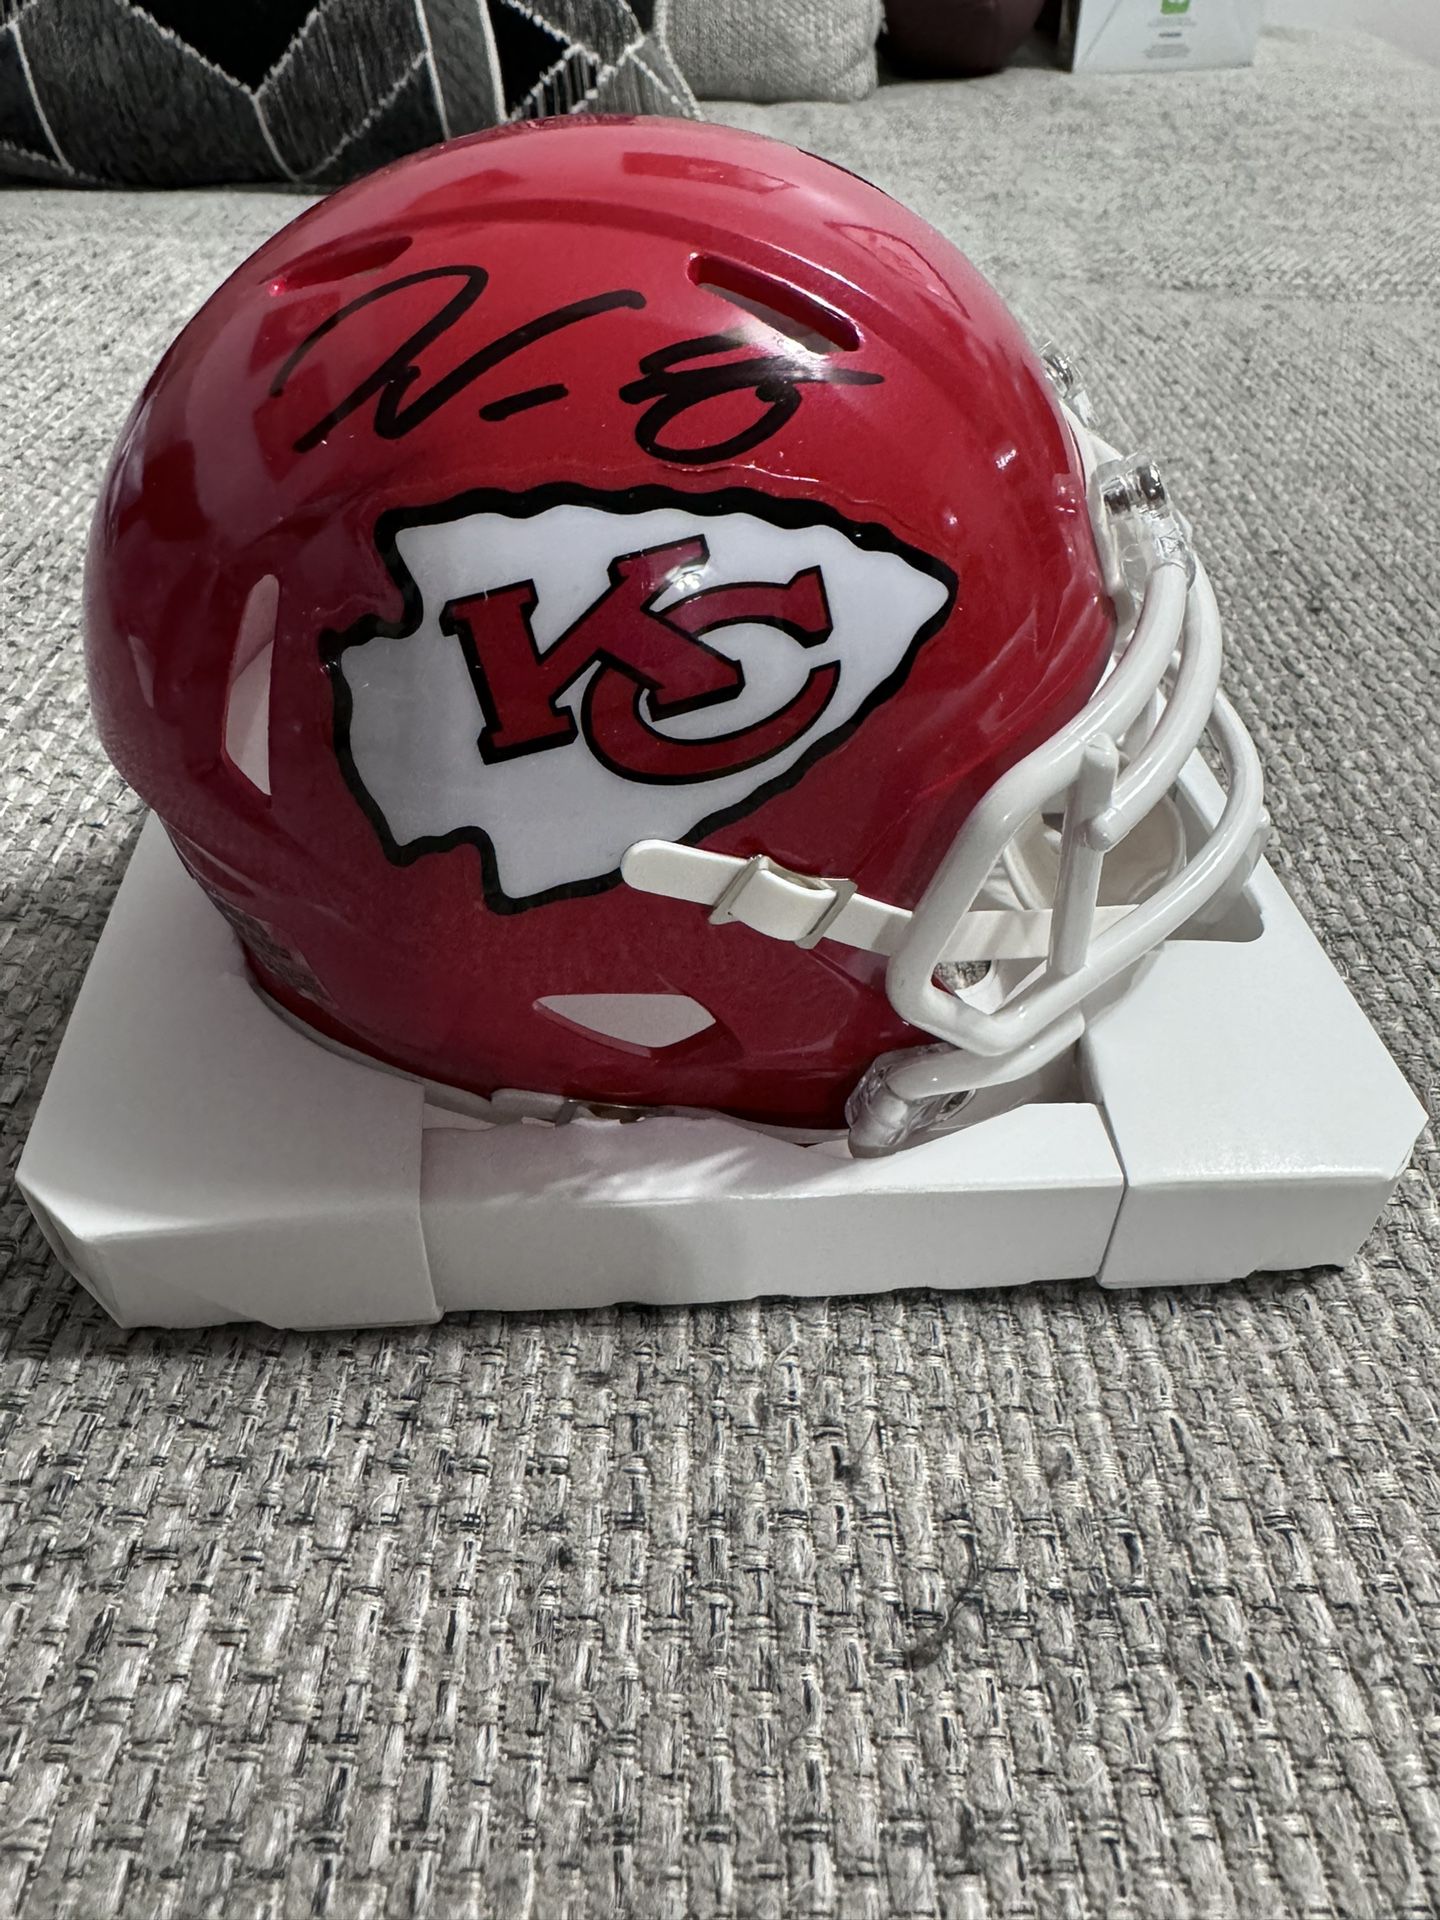 Noah Gray Signed Autograph Mini Helmet With Beckett Coa - Kansas City Chiefs